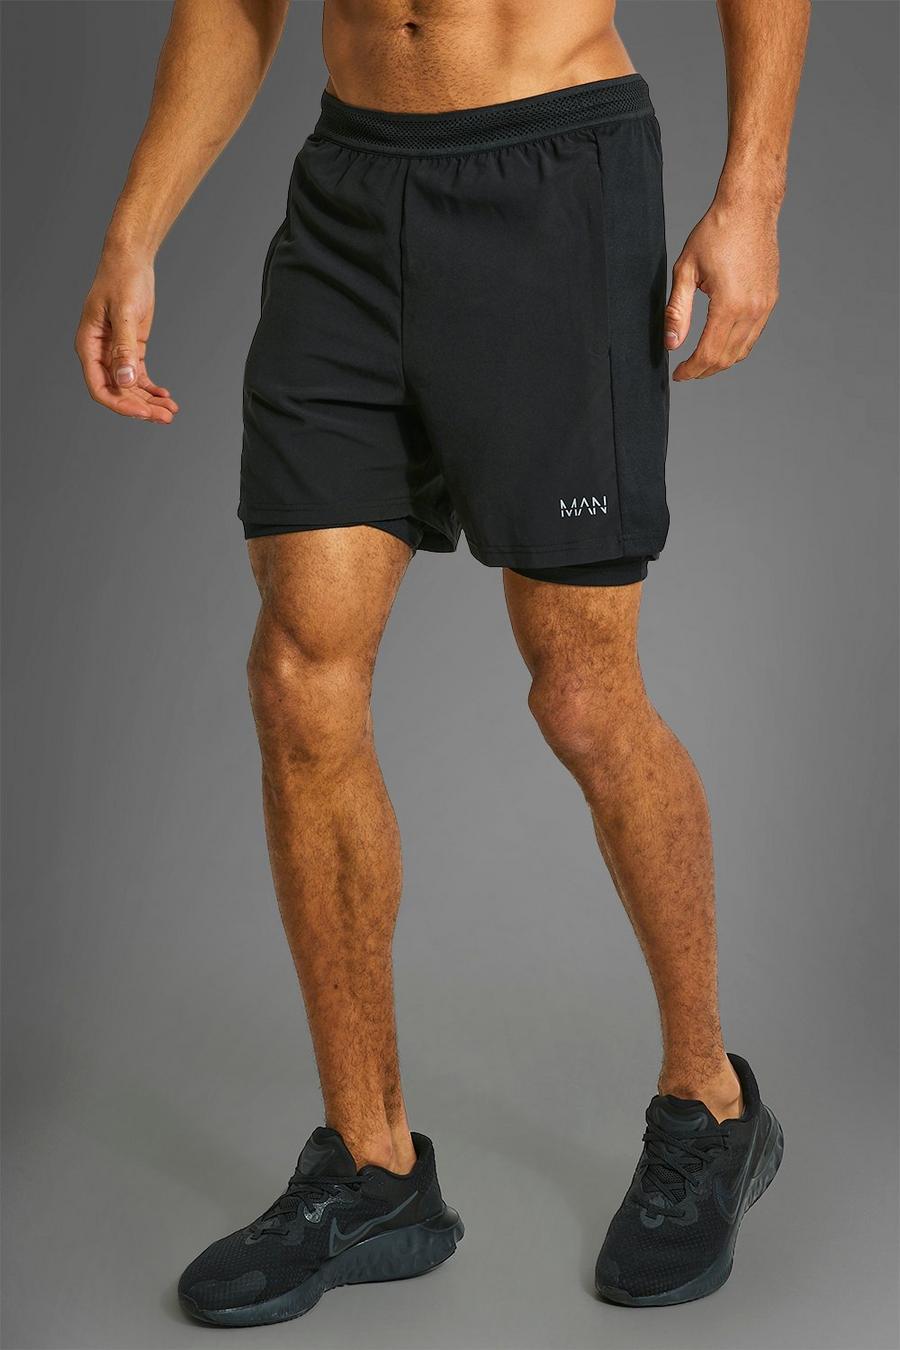 Pantaloncini Man Active Gym per alta performance 2 in 1, Black image number 1